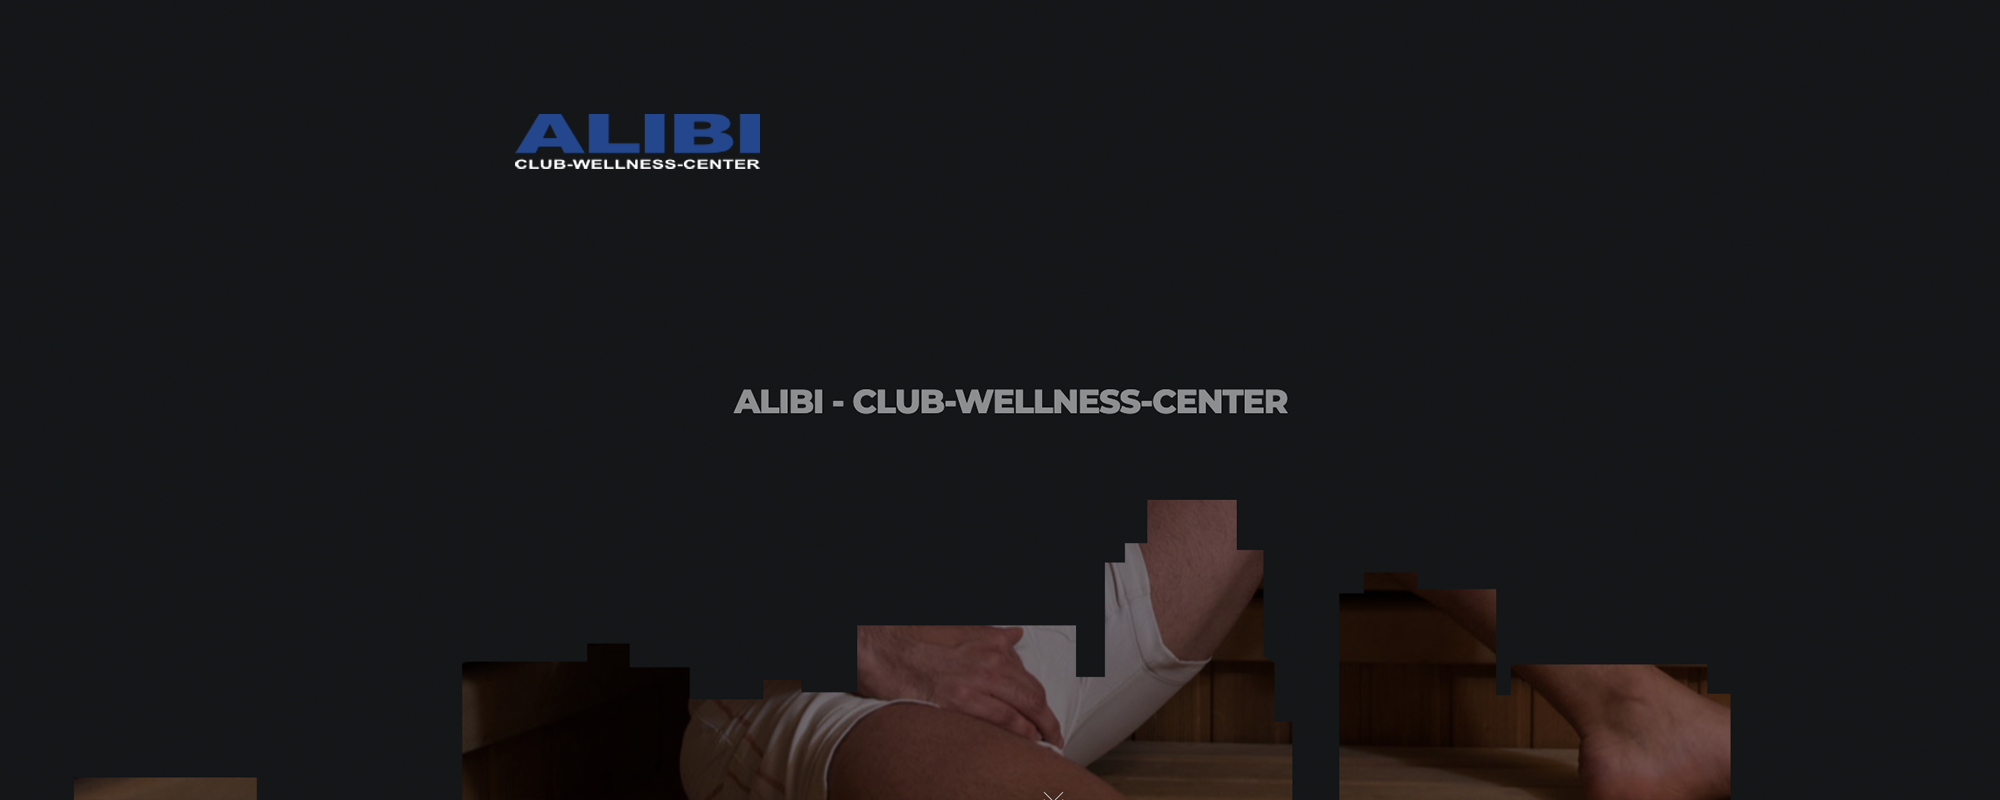 ALIBI CLUB WELLNESS-CENTER